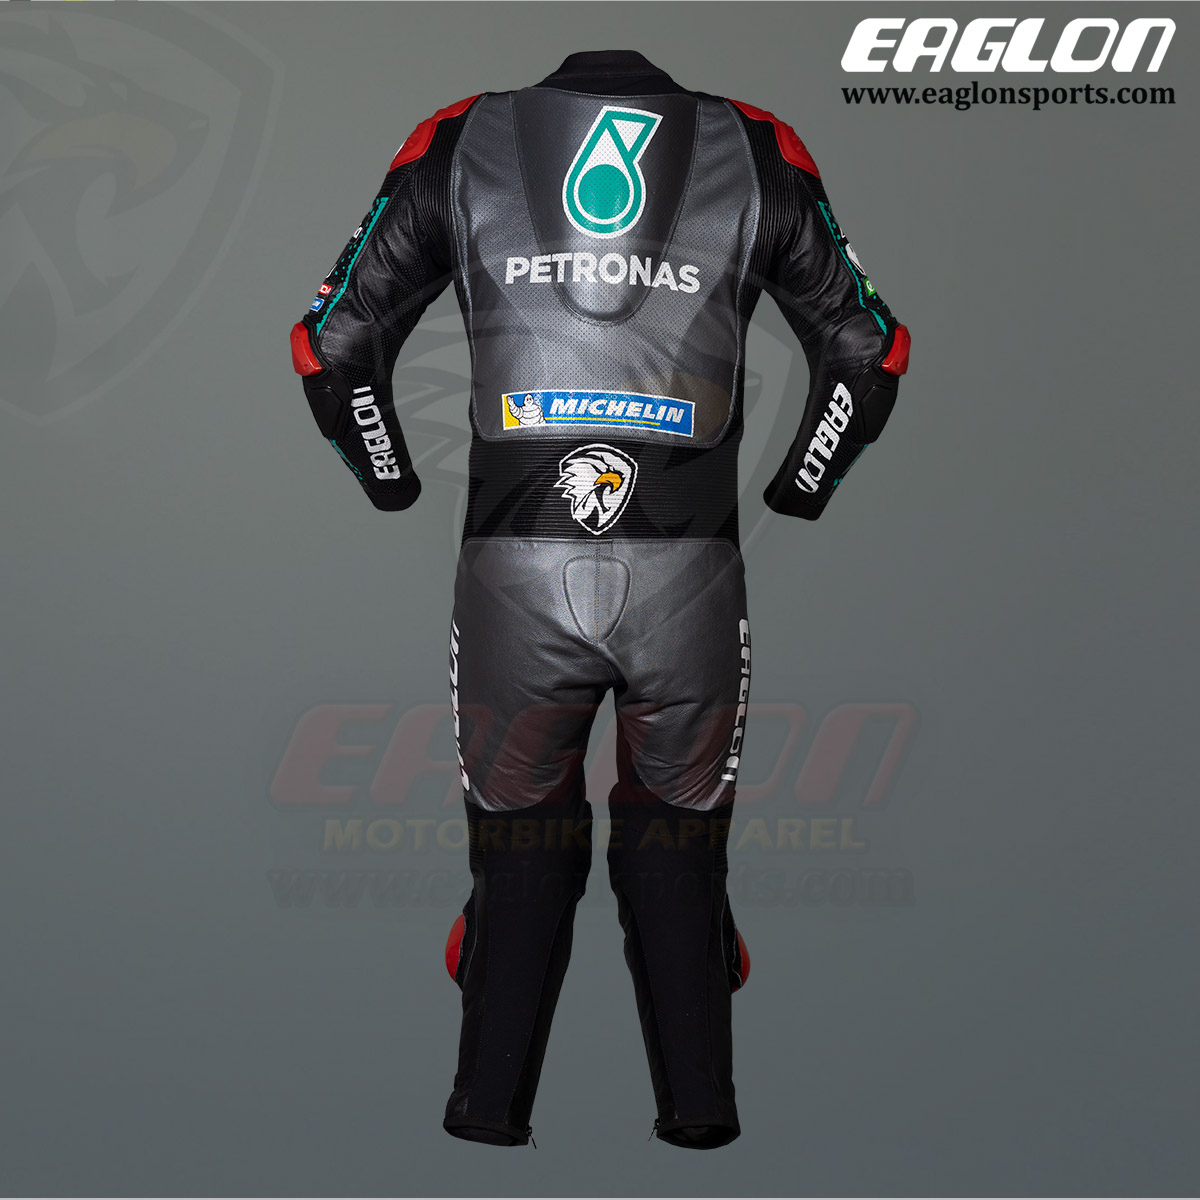 abio Quartararo Yamaha Petronas MotoGP 2020 Leather Suit